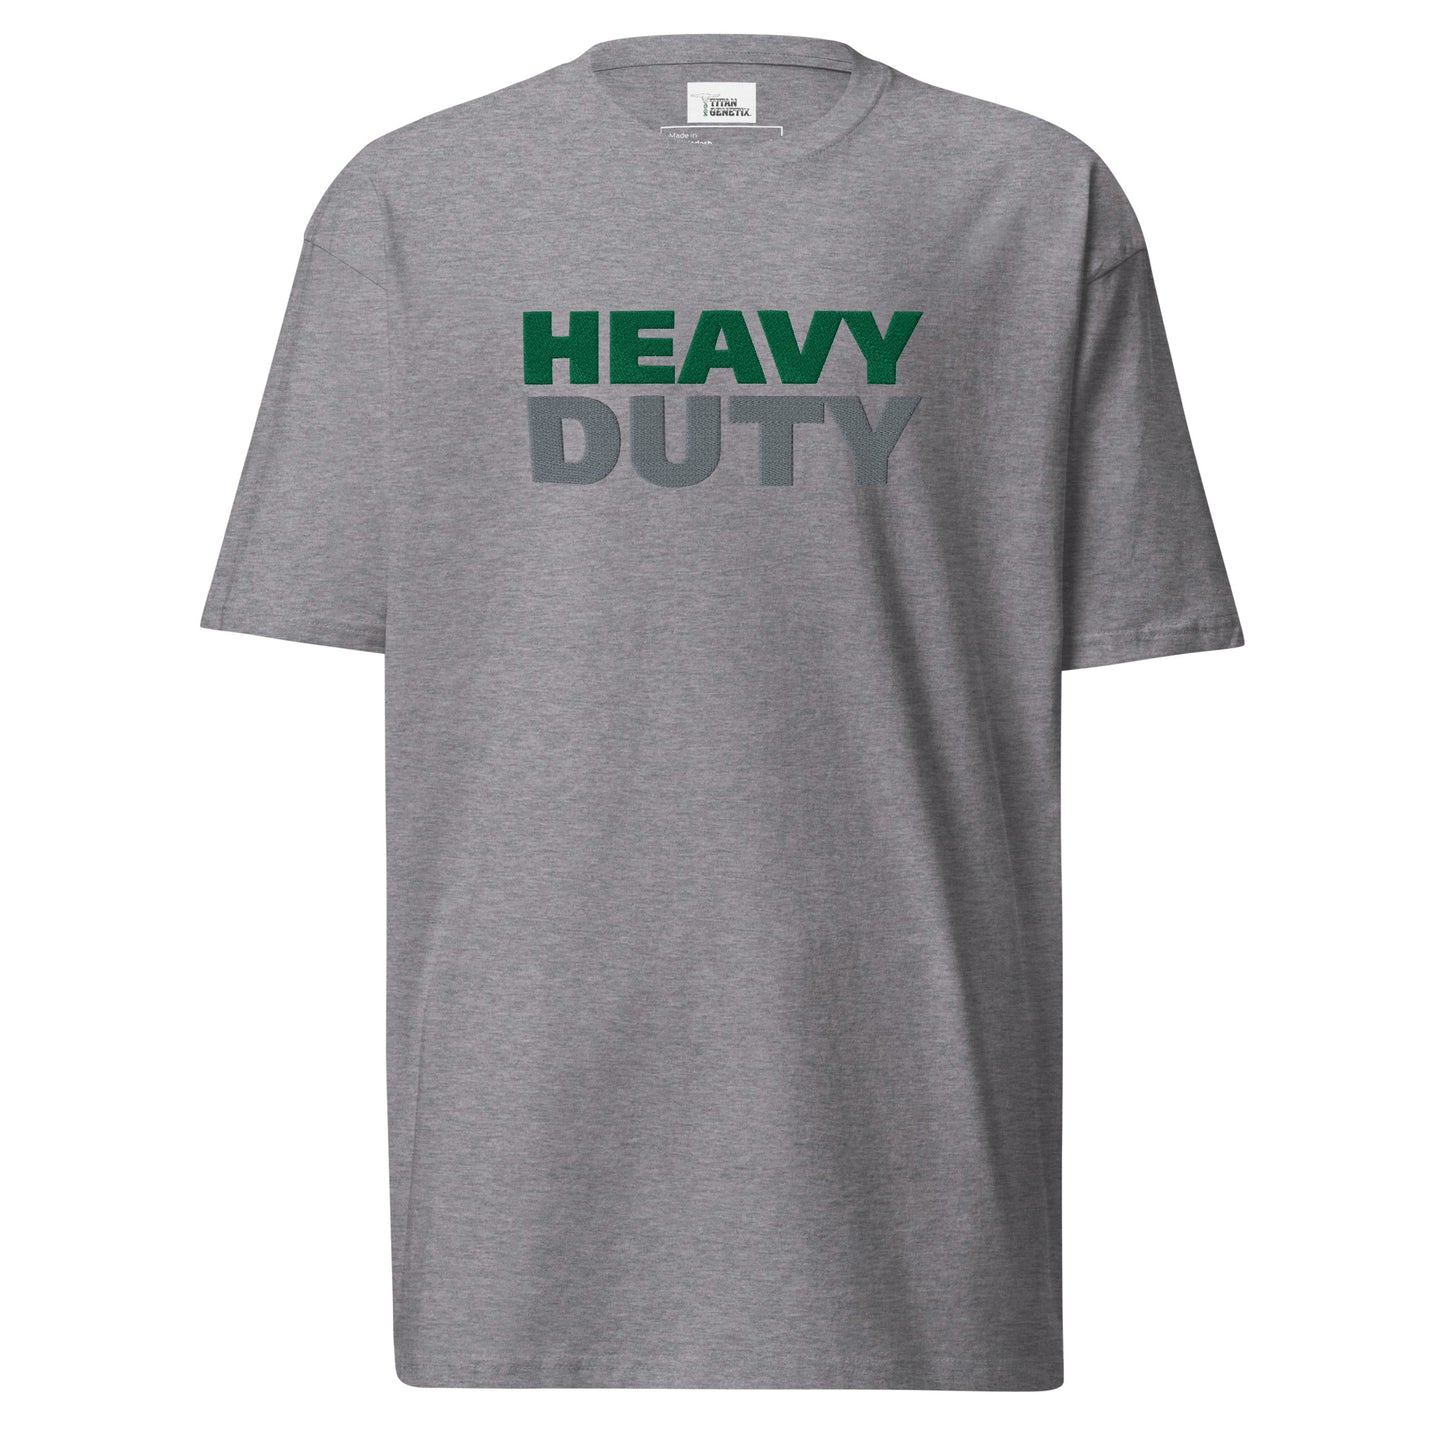 Heavy Duty - Men’s Premium Tee